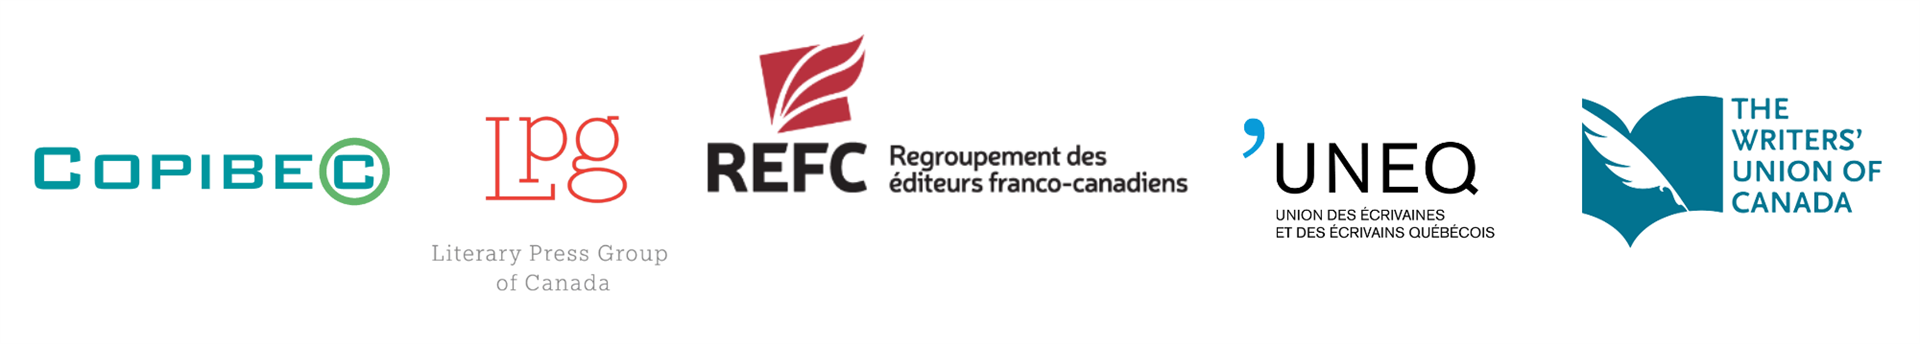 The logos of Copibec, LPG, REFC, UNEQ, and the Writers' Union of Canada.